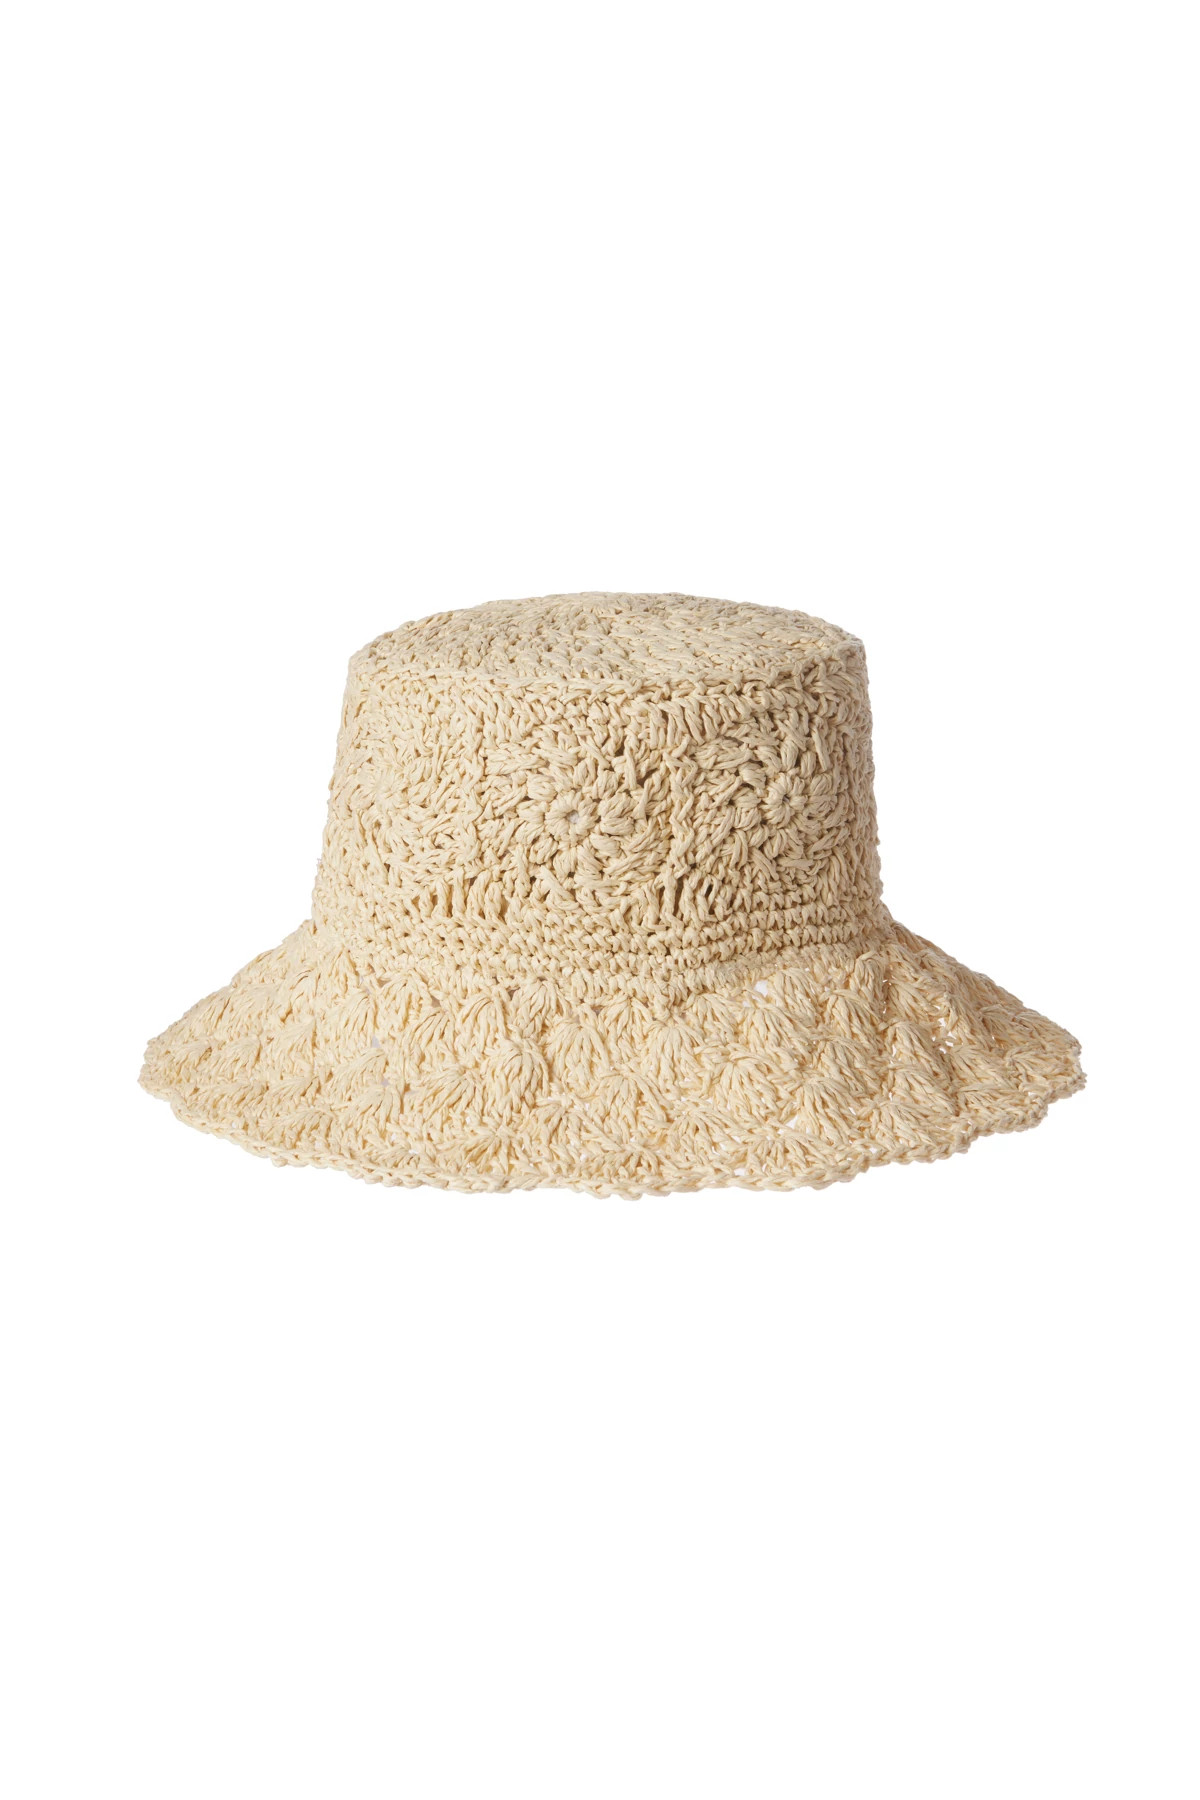 NATURAL Crochet Bucket Hat image number 1